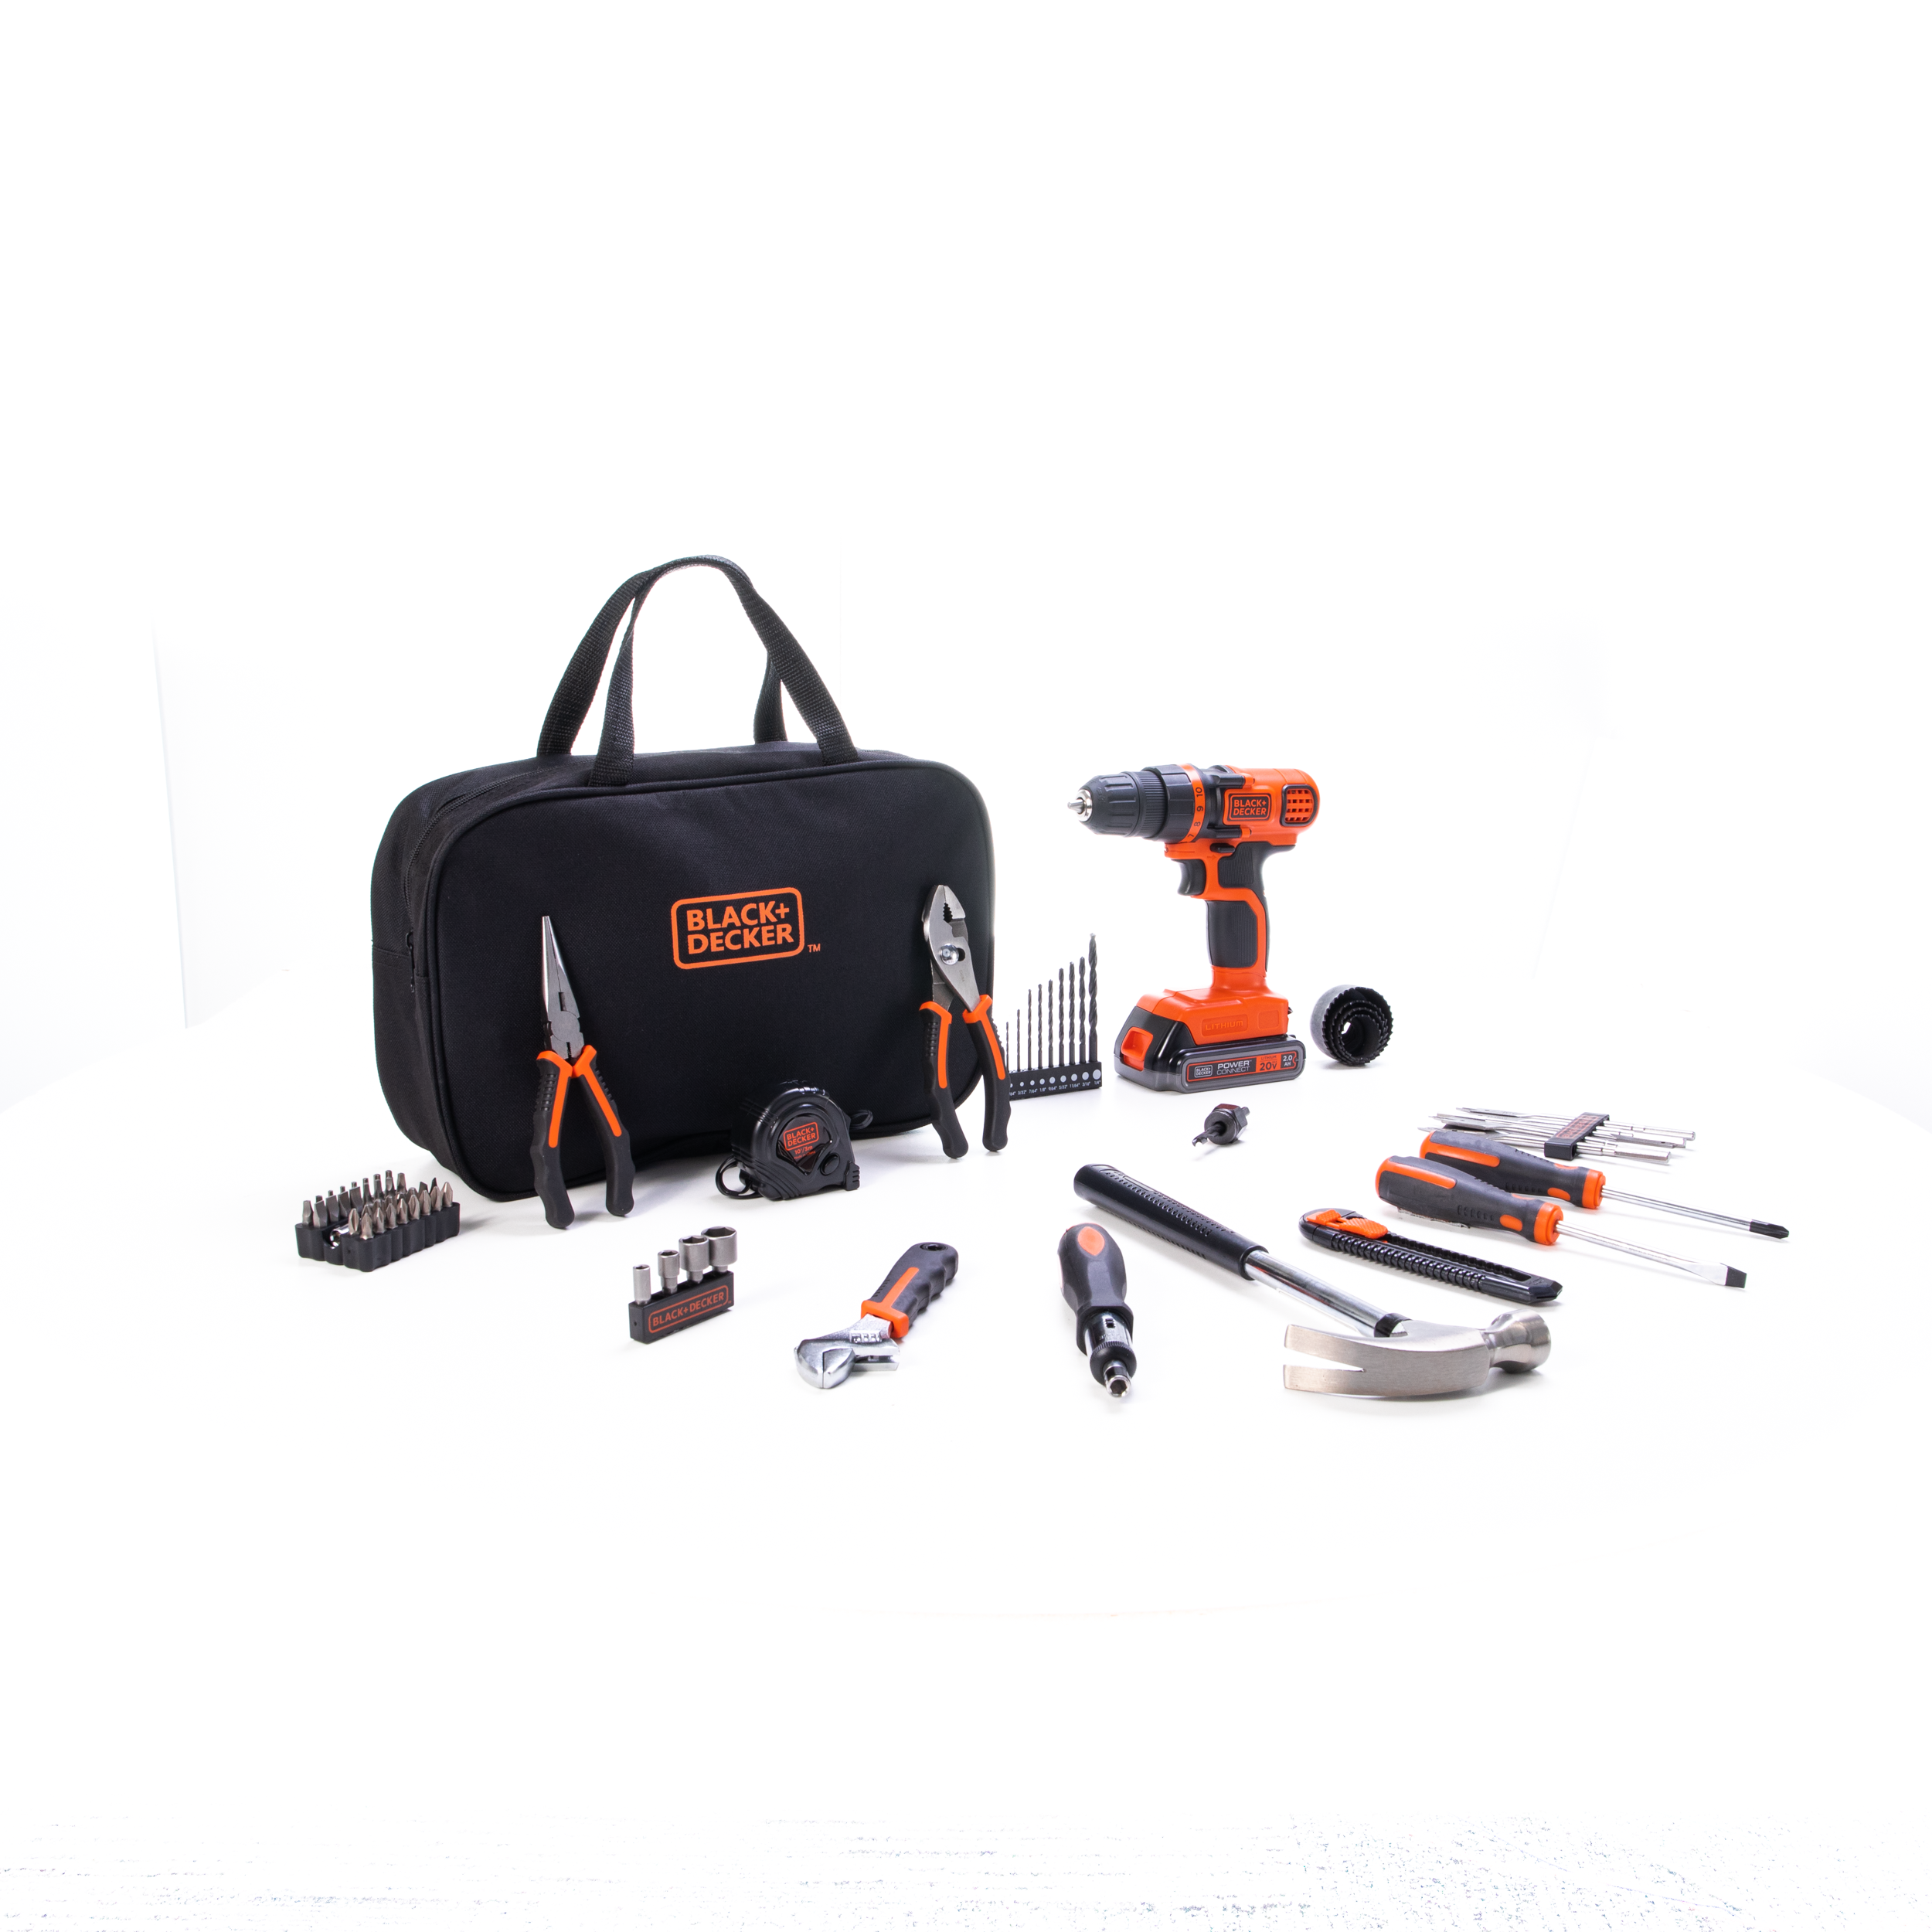 68 - Piece BLACK+DECKER 20V Max Drill & Home Tool Kit $69 + Free Shipping